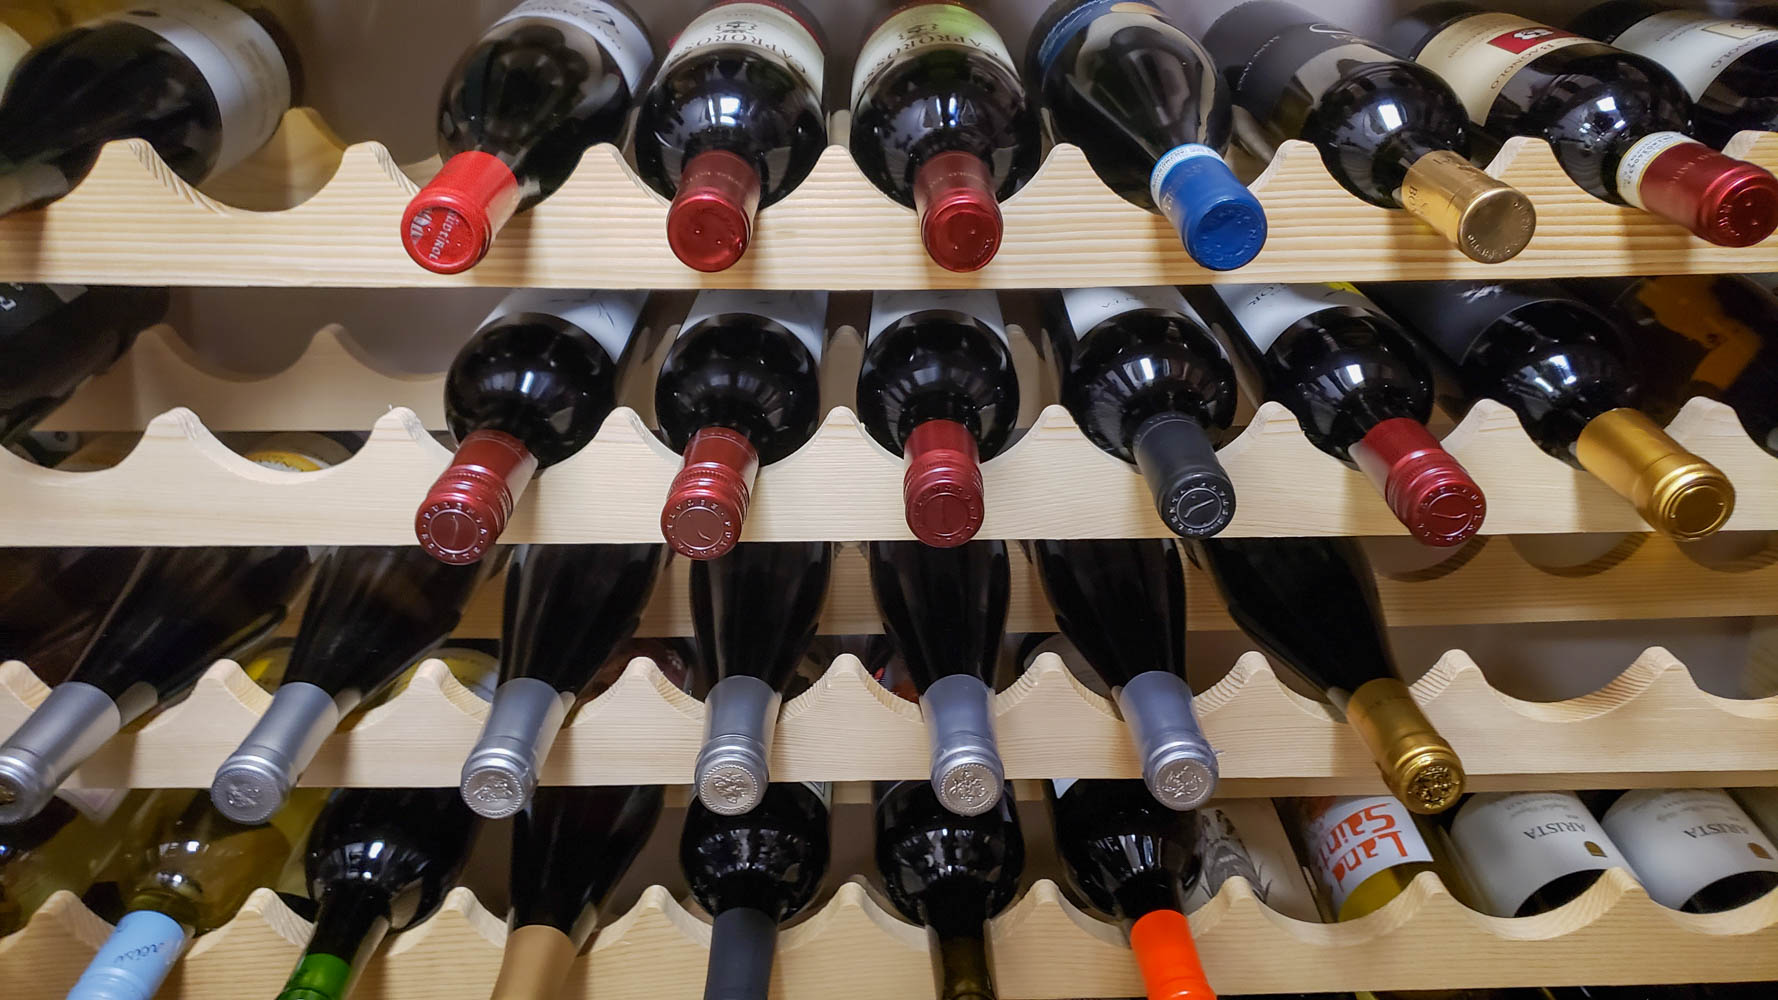 Home Wine Cellar Racks Stocked With Wine